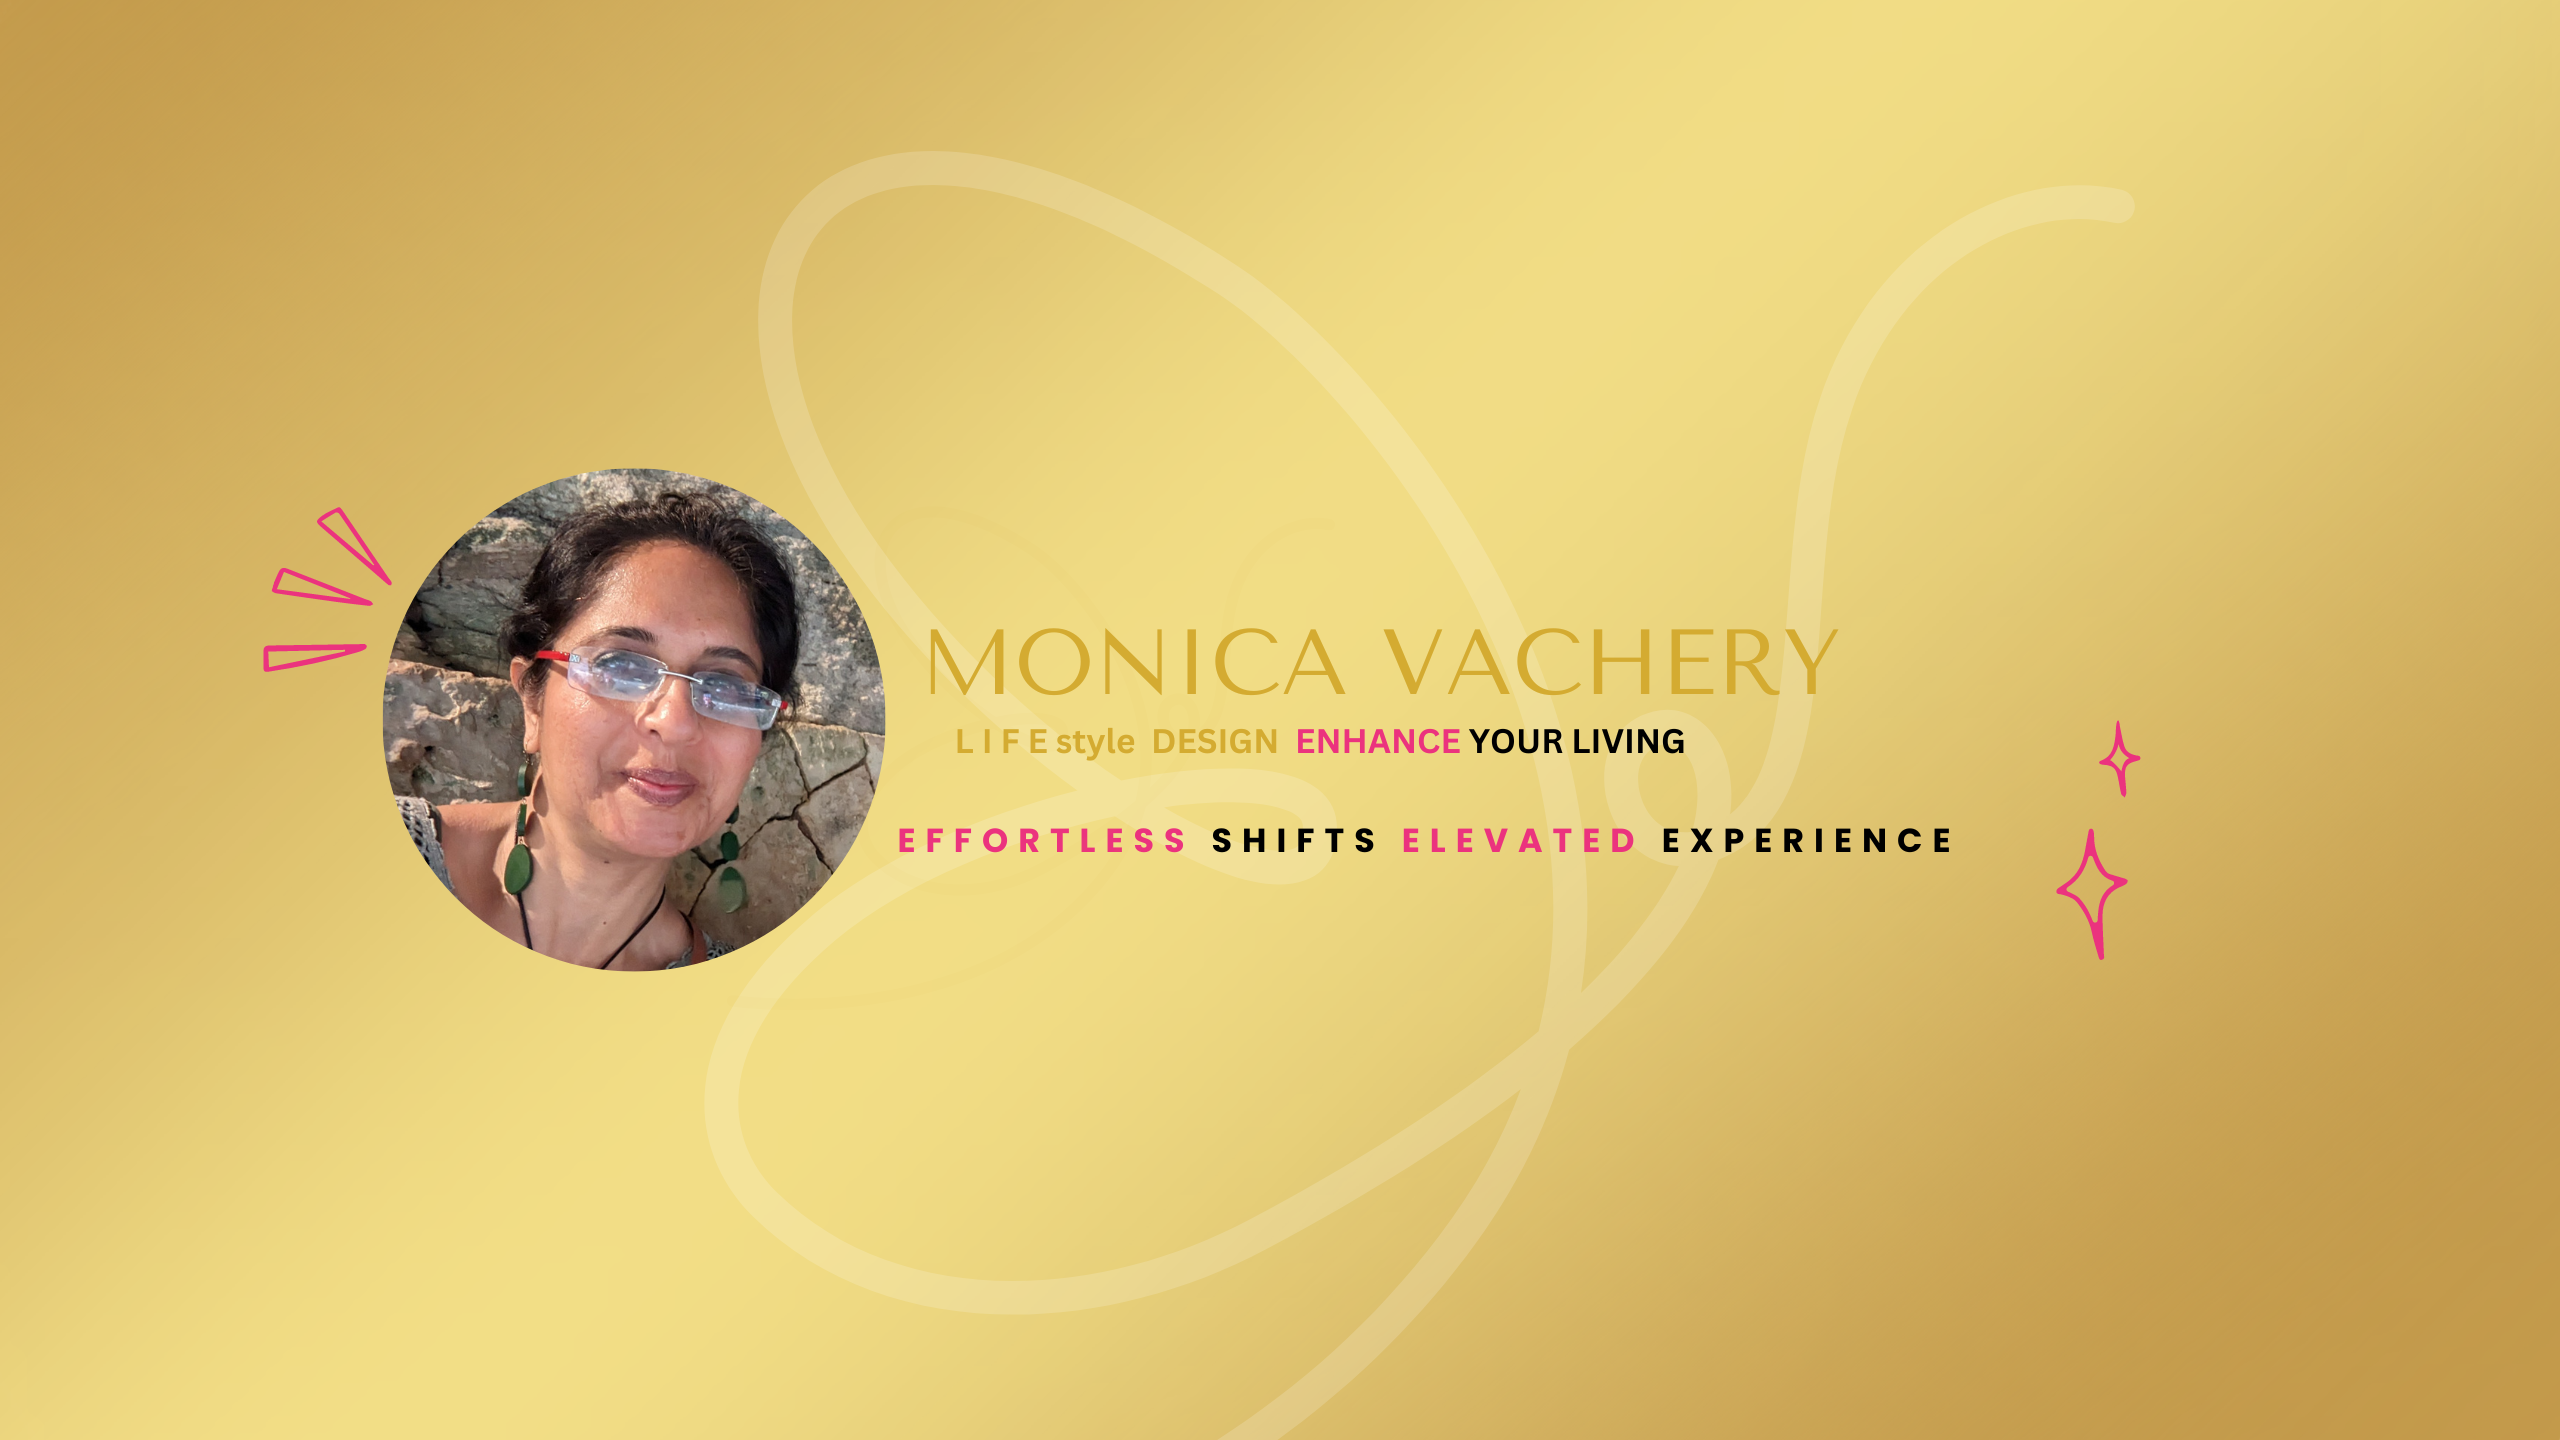 Monica Vachery. The LIFEstyle Design School.